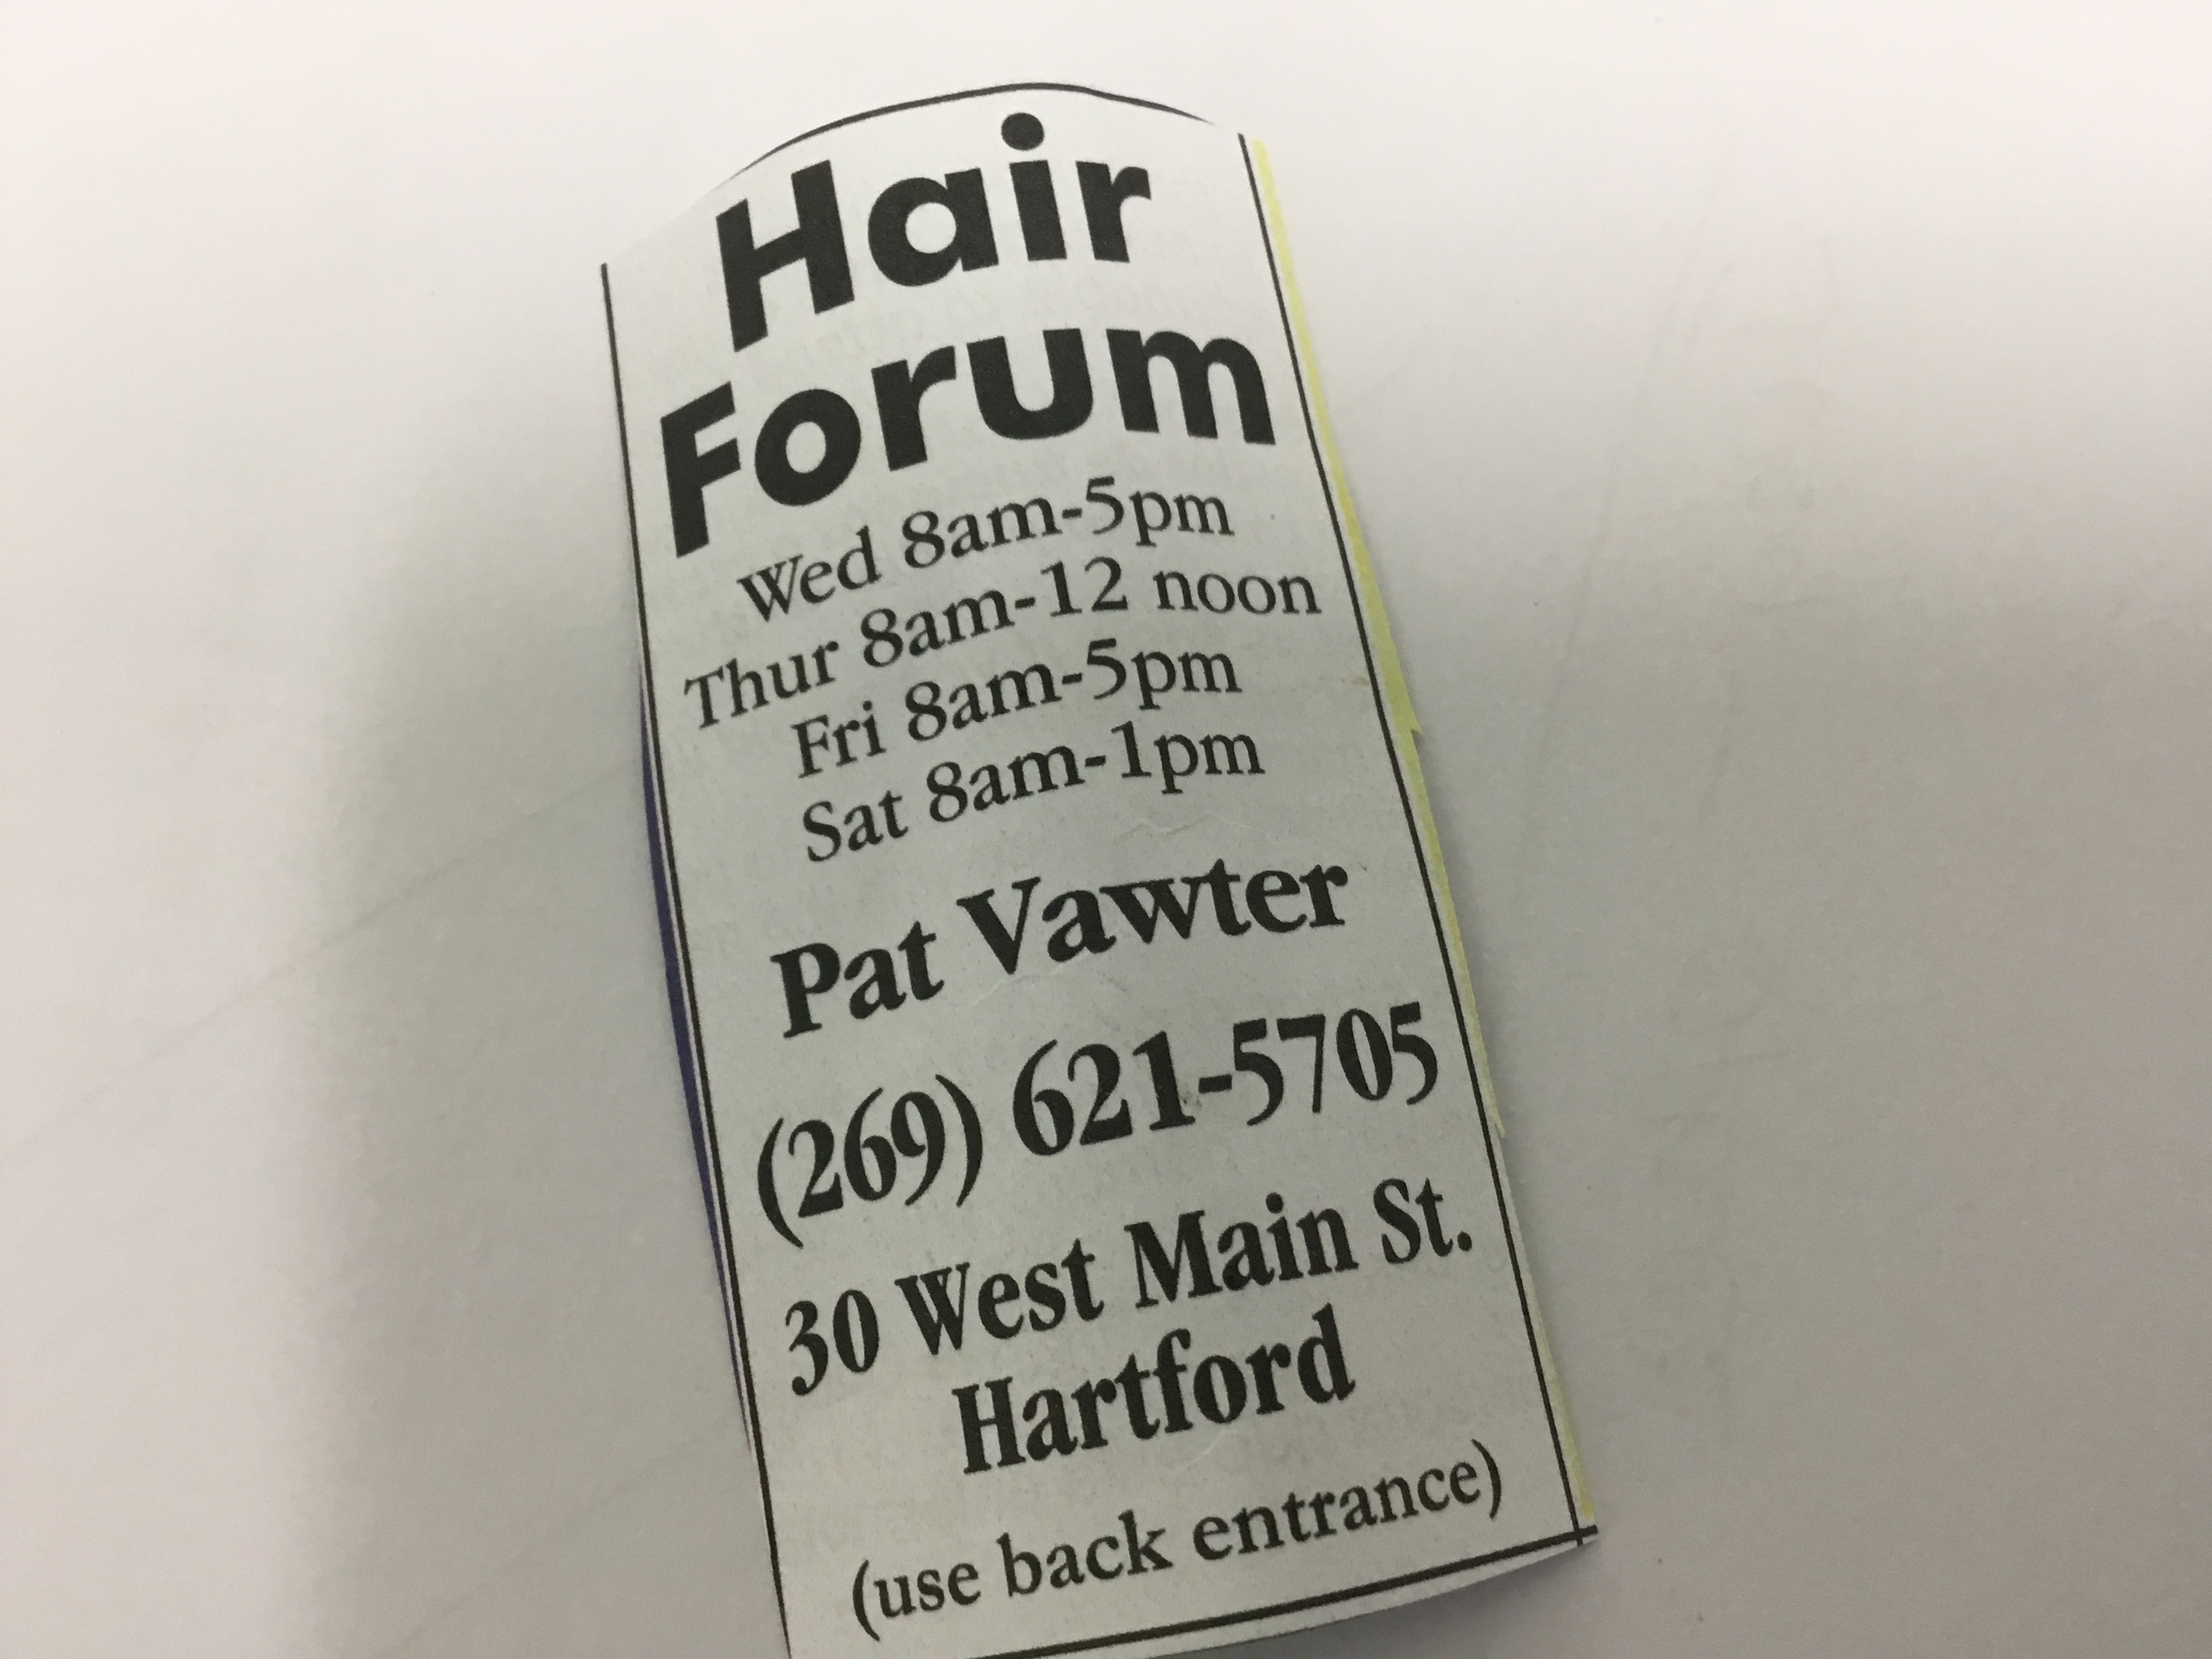 Hair Forum 30 W Main St, Hartford Michigan 49057